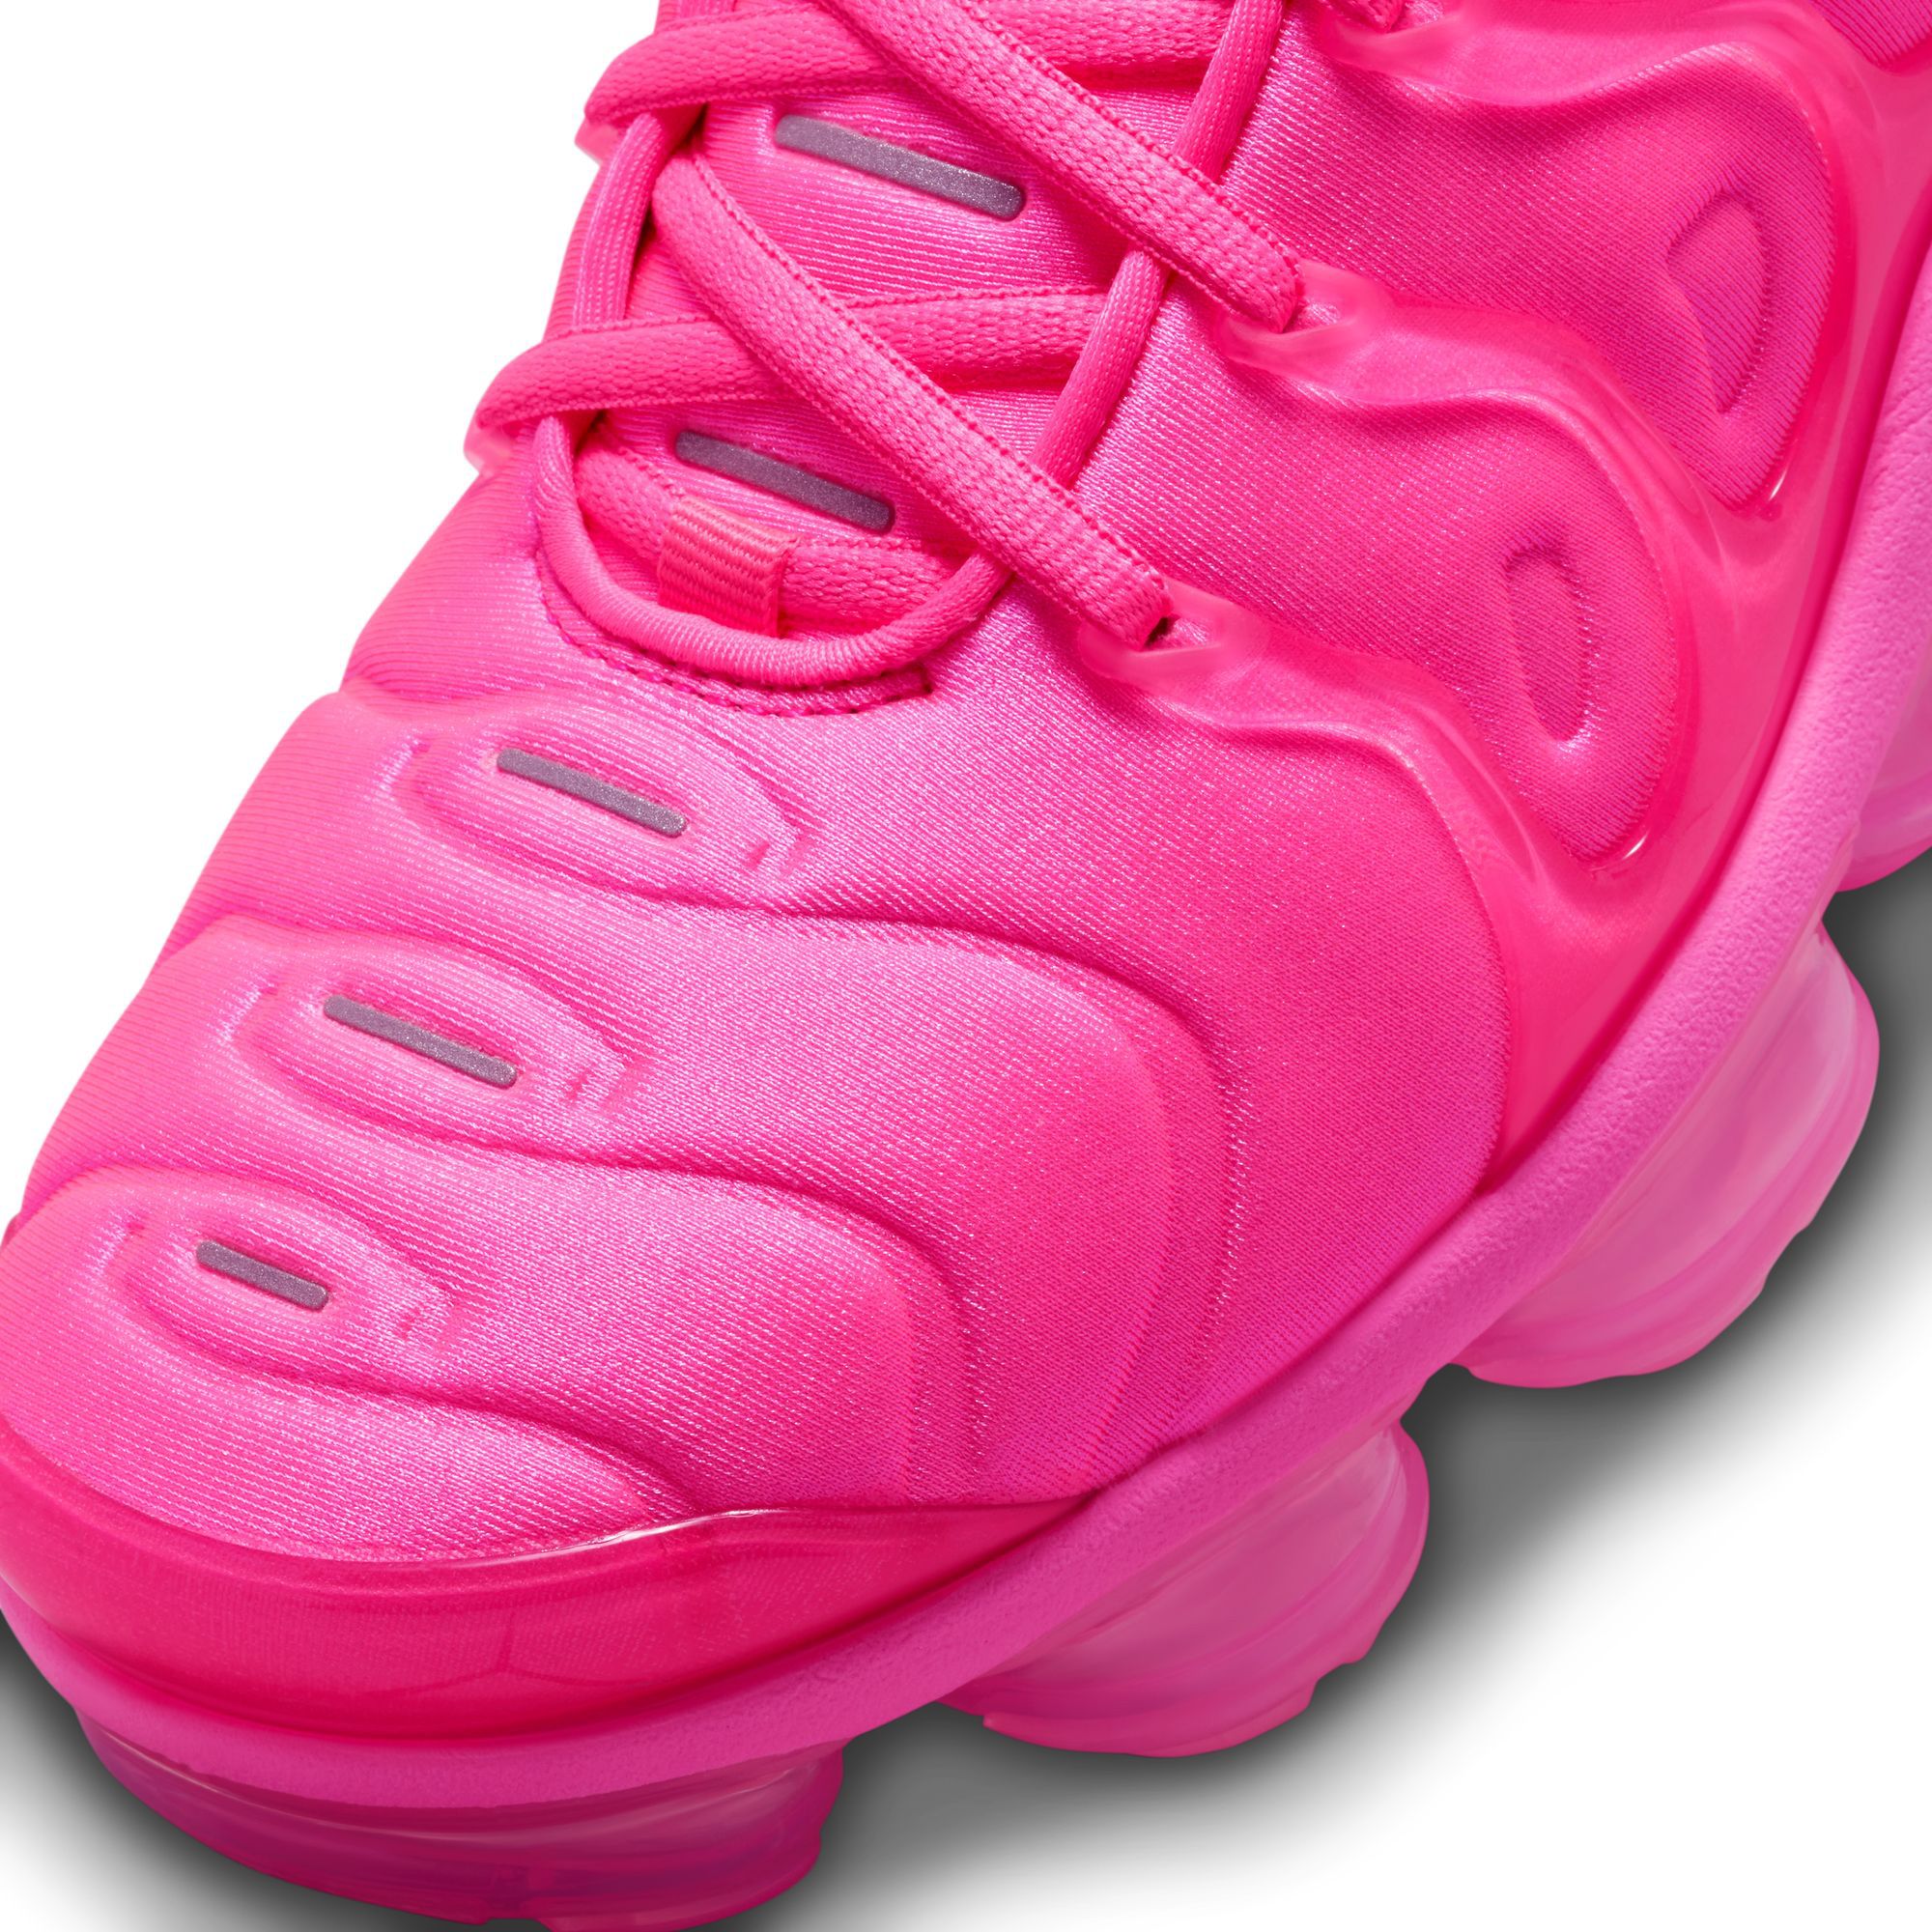 Nike Air VaporMax Plus Hyper Pink/White/Pink Blast Women's Shoe